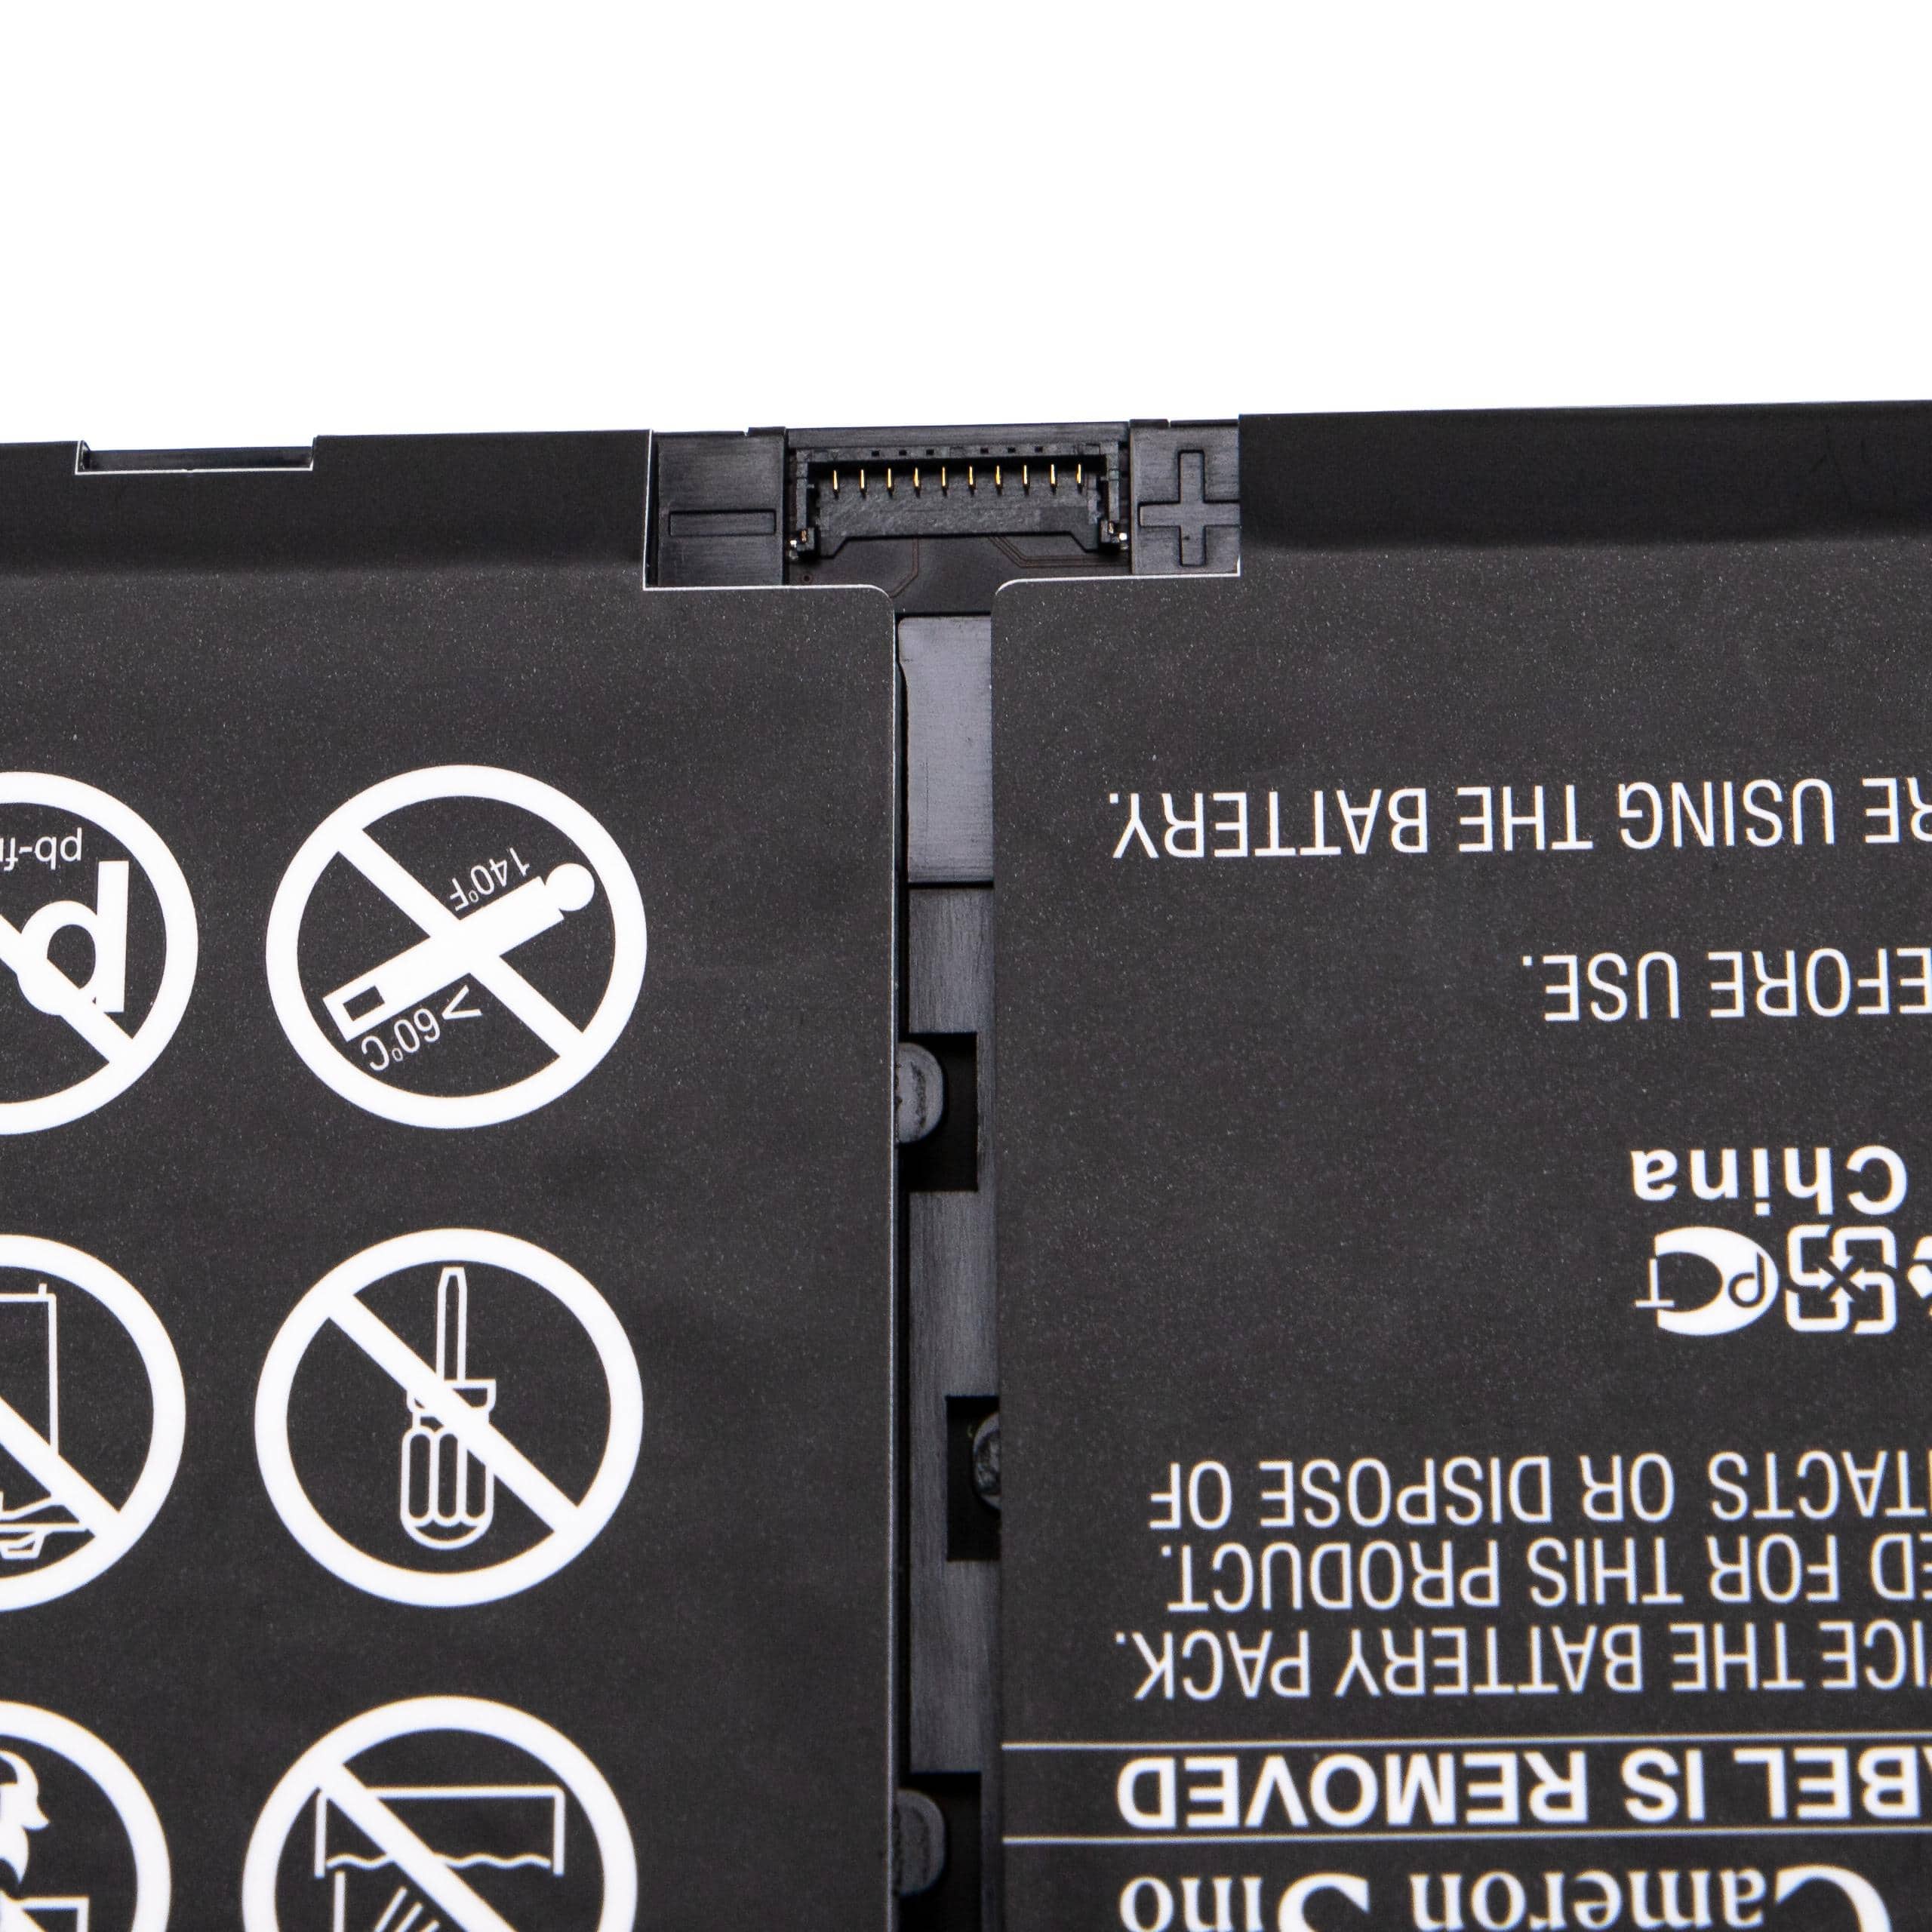 Notebook Battery Replacement for Dell JK6Y6, CF5RH, C5KG6 - 3450mAh 11.25V Li-polymer